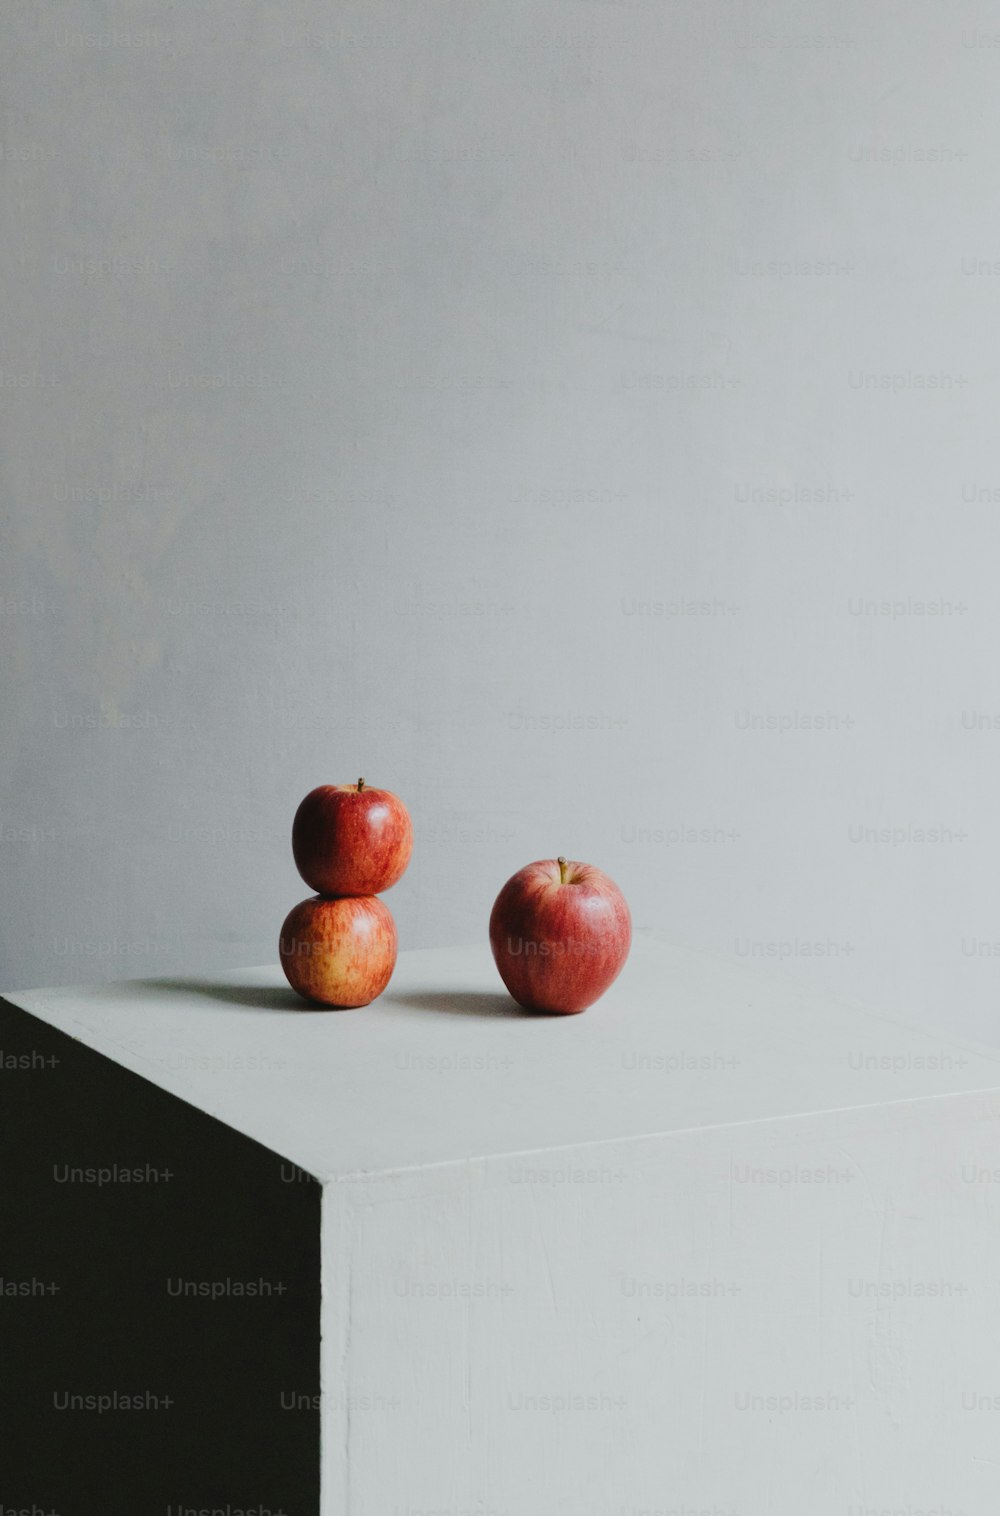 due mele sedute sopra una superficie bianca